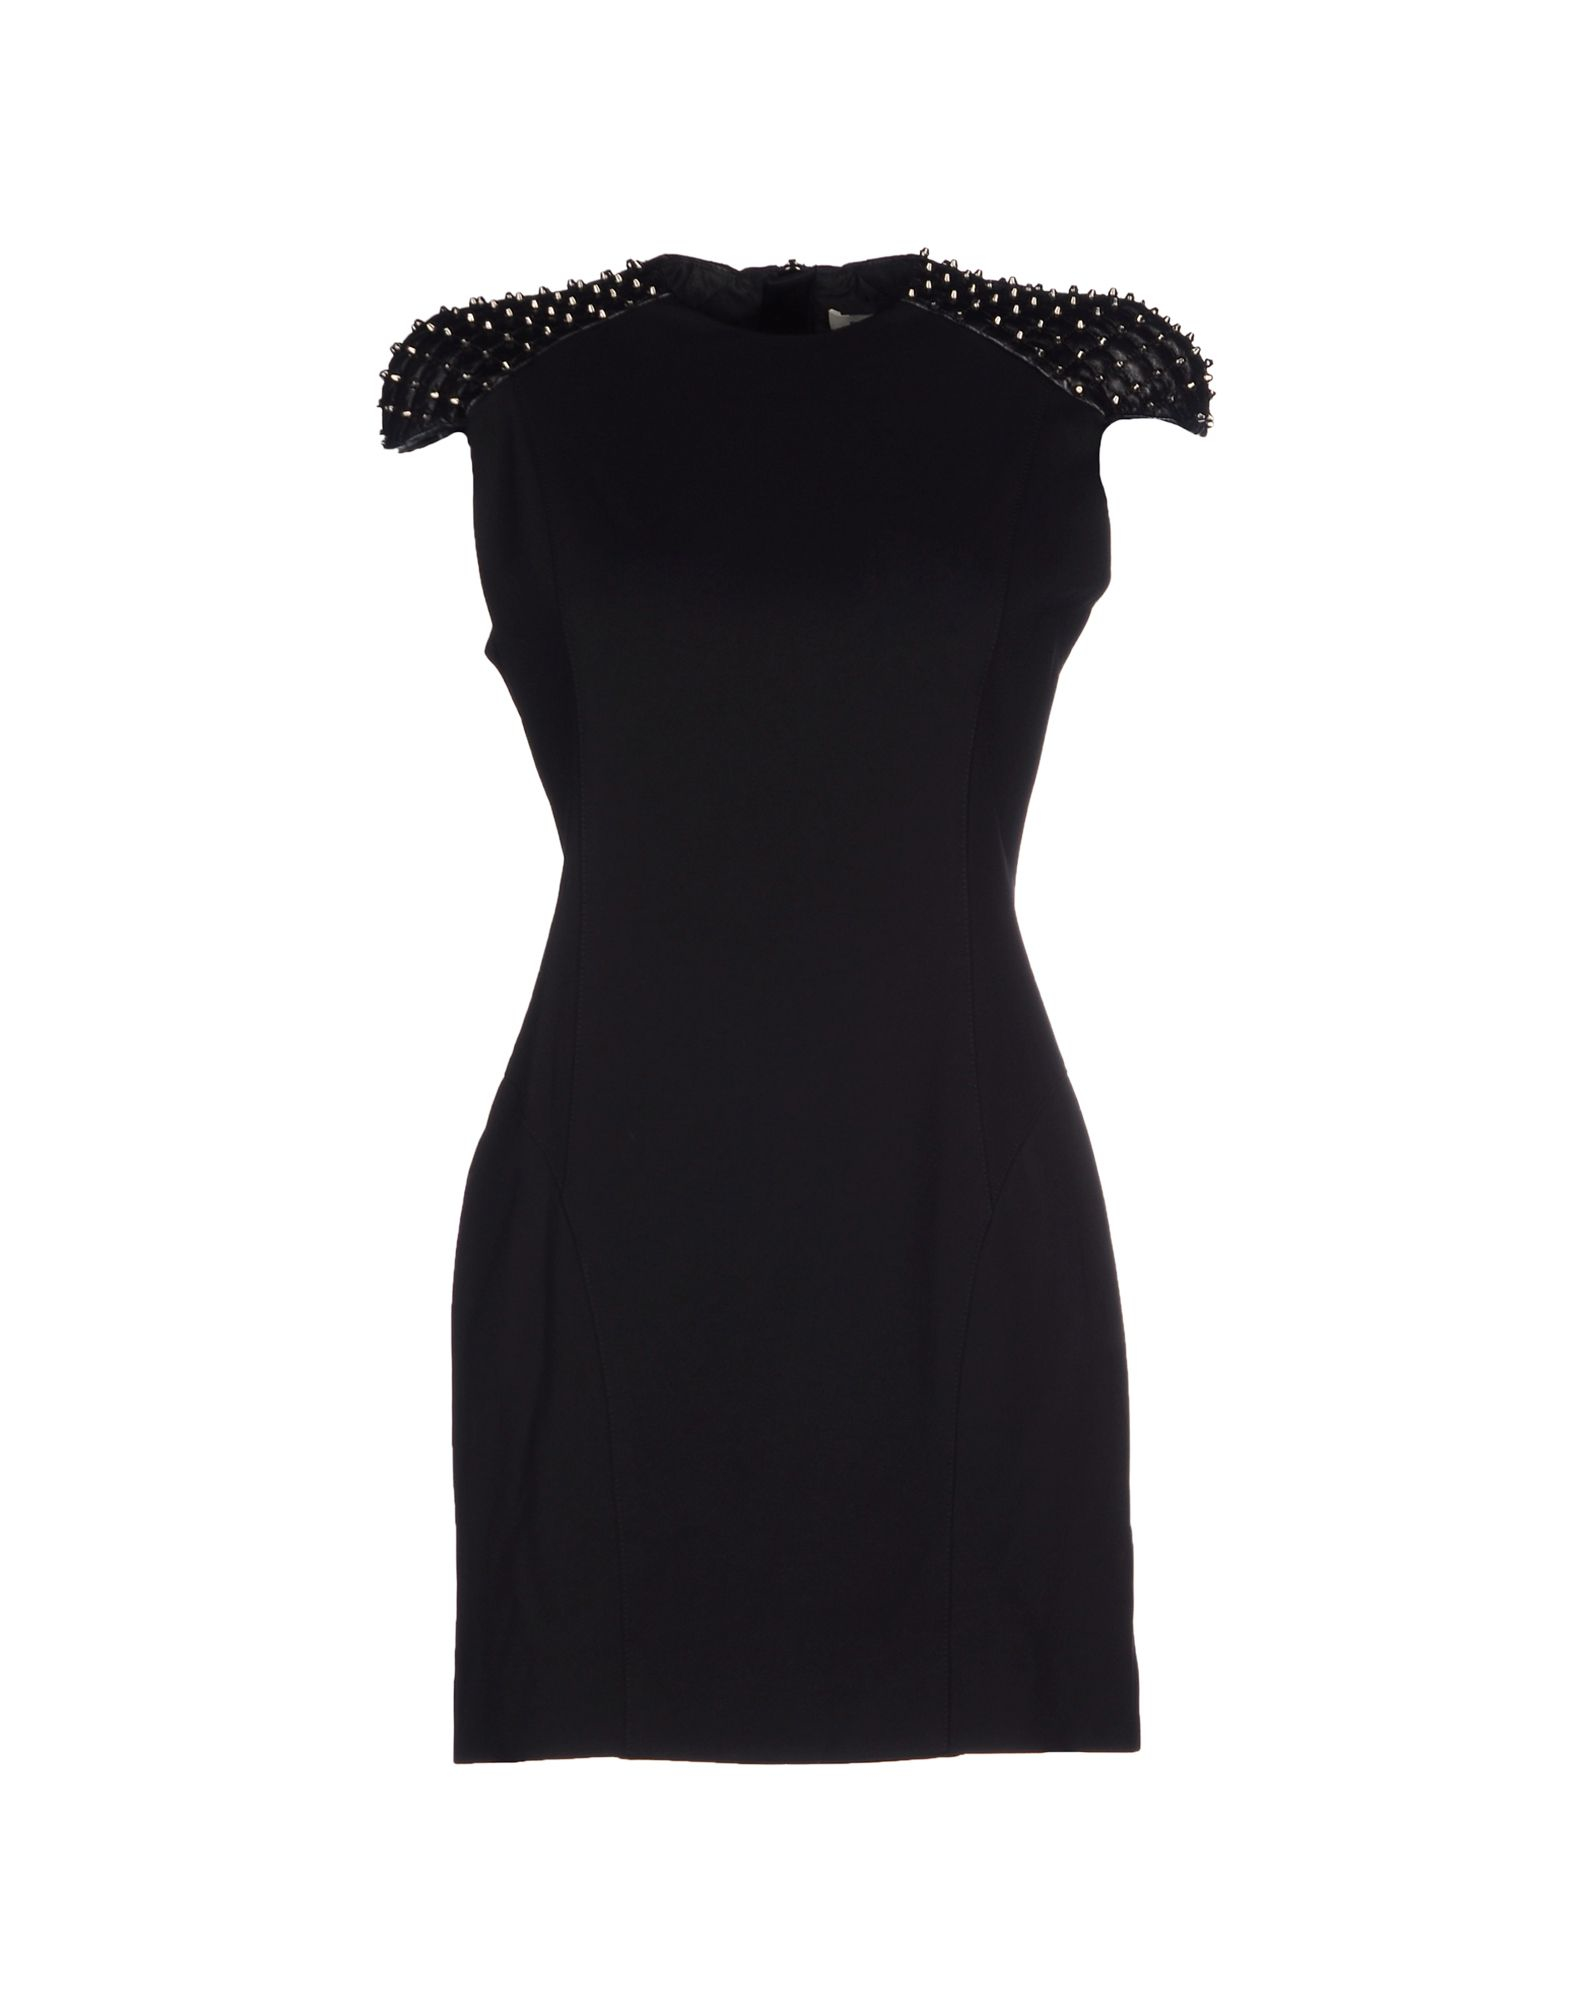 Lyst - Balmain Short Dress in Black